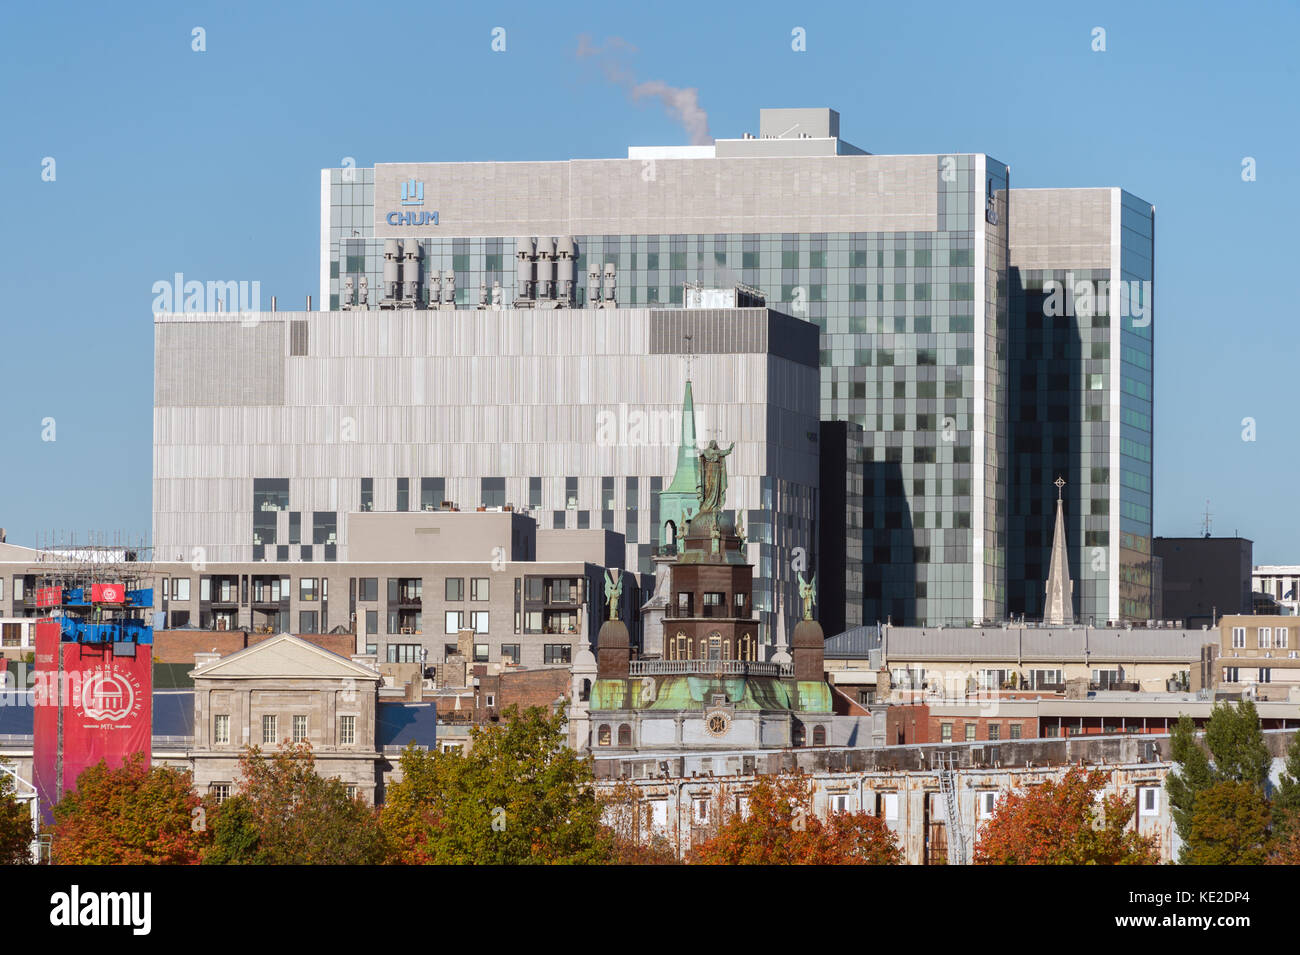 Montreal, Canada - 12 October 2017: Montreal's CHUM superhospital Stock Photo